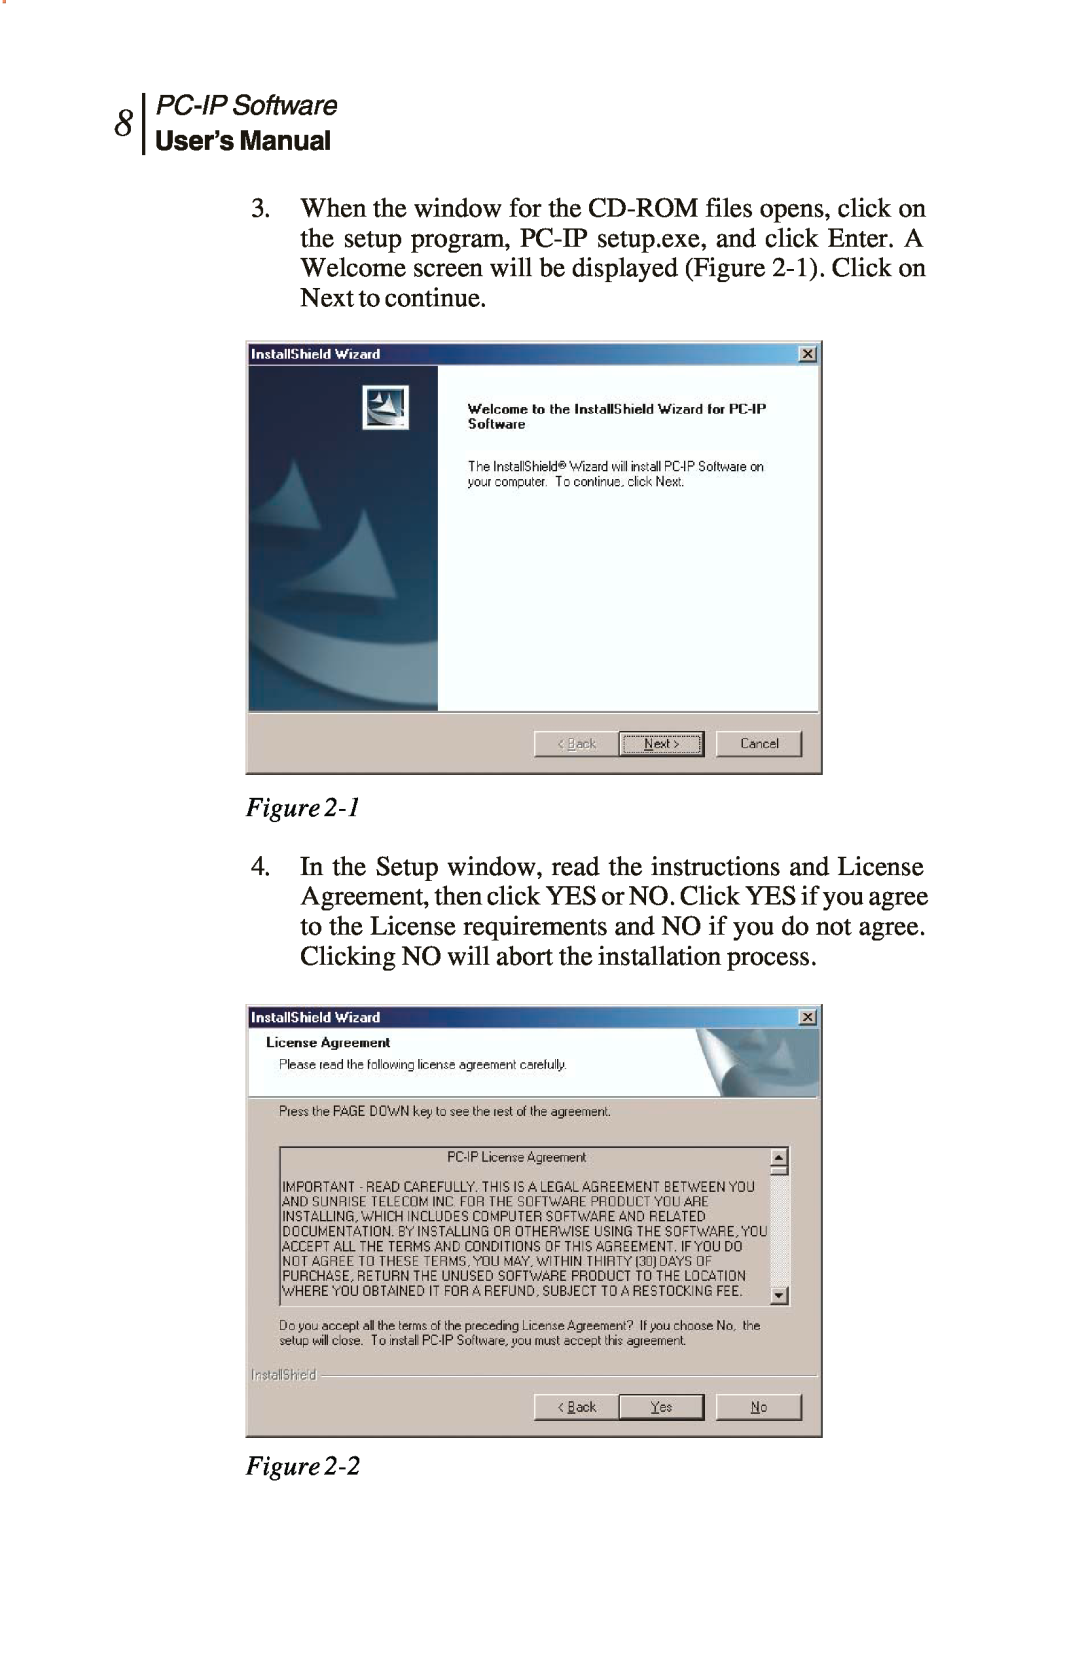 Sunrise Global CM250 IP, CM100 IP, and CM500 IP manual Figure, PC-IPSoftware, User’s Manual 